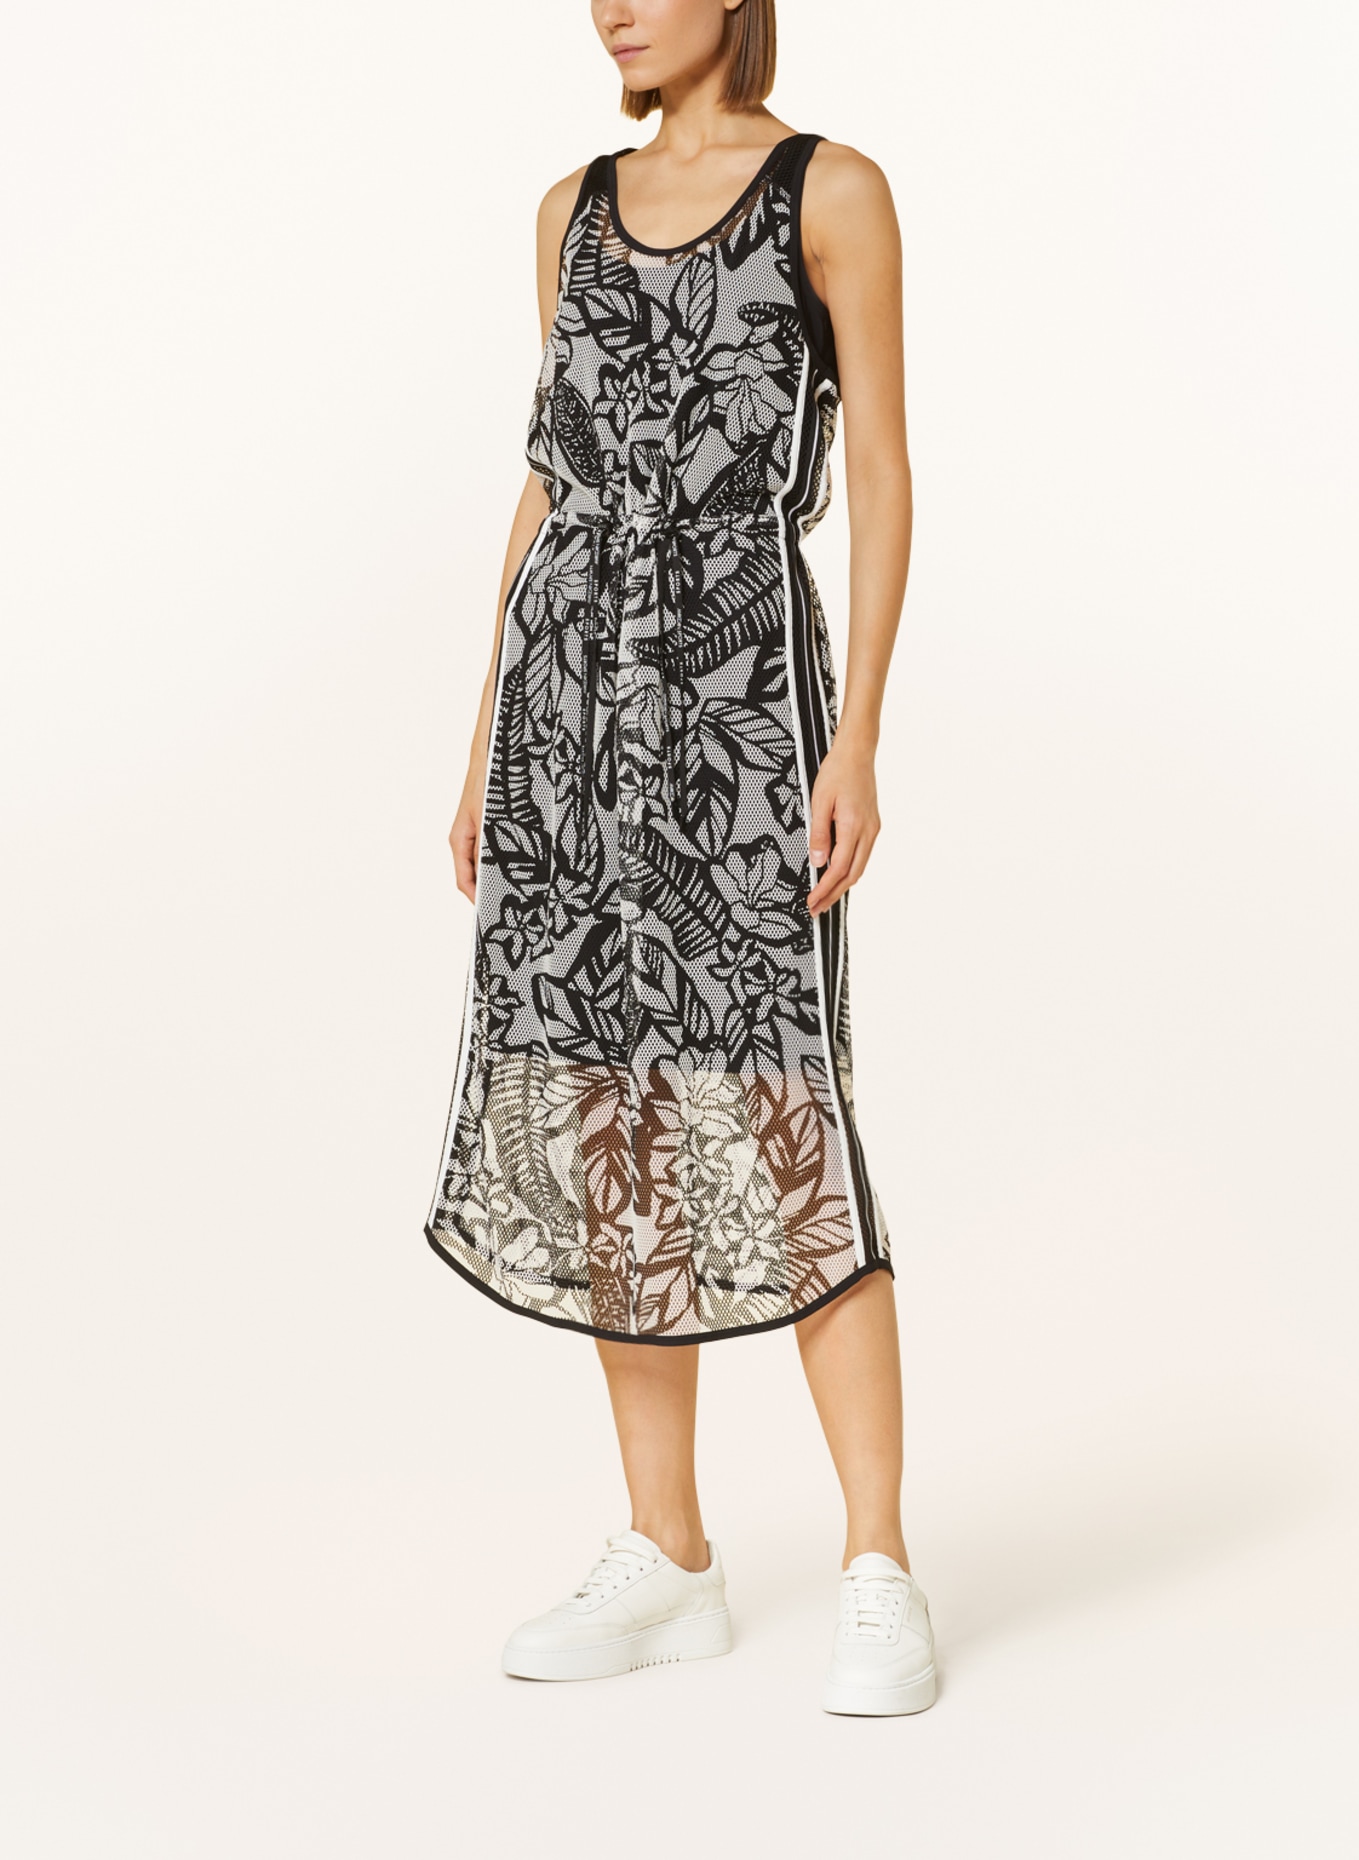 MARC CAIN Mesh-Kleid, Farbe: 910 black and white (Bild 2)